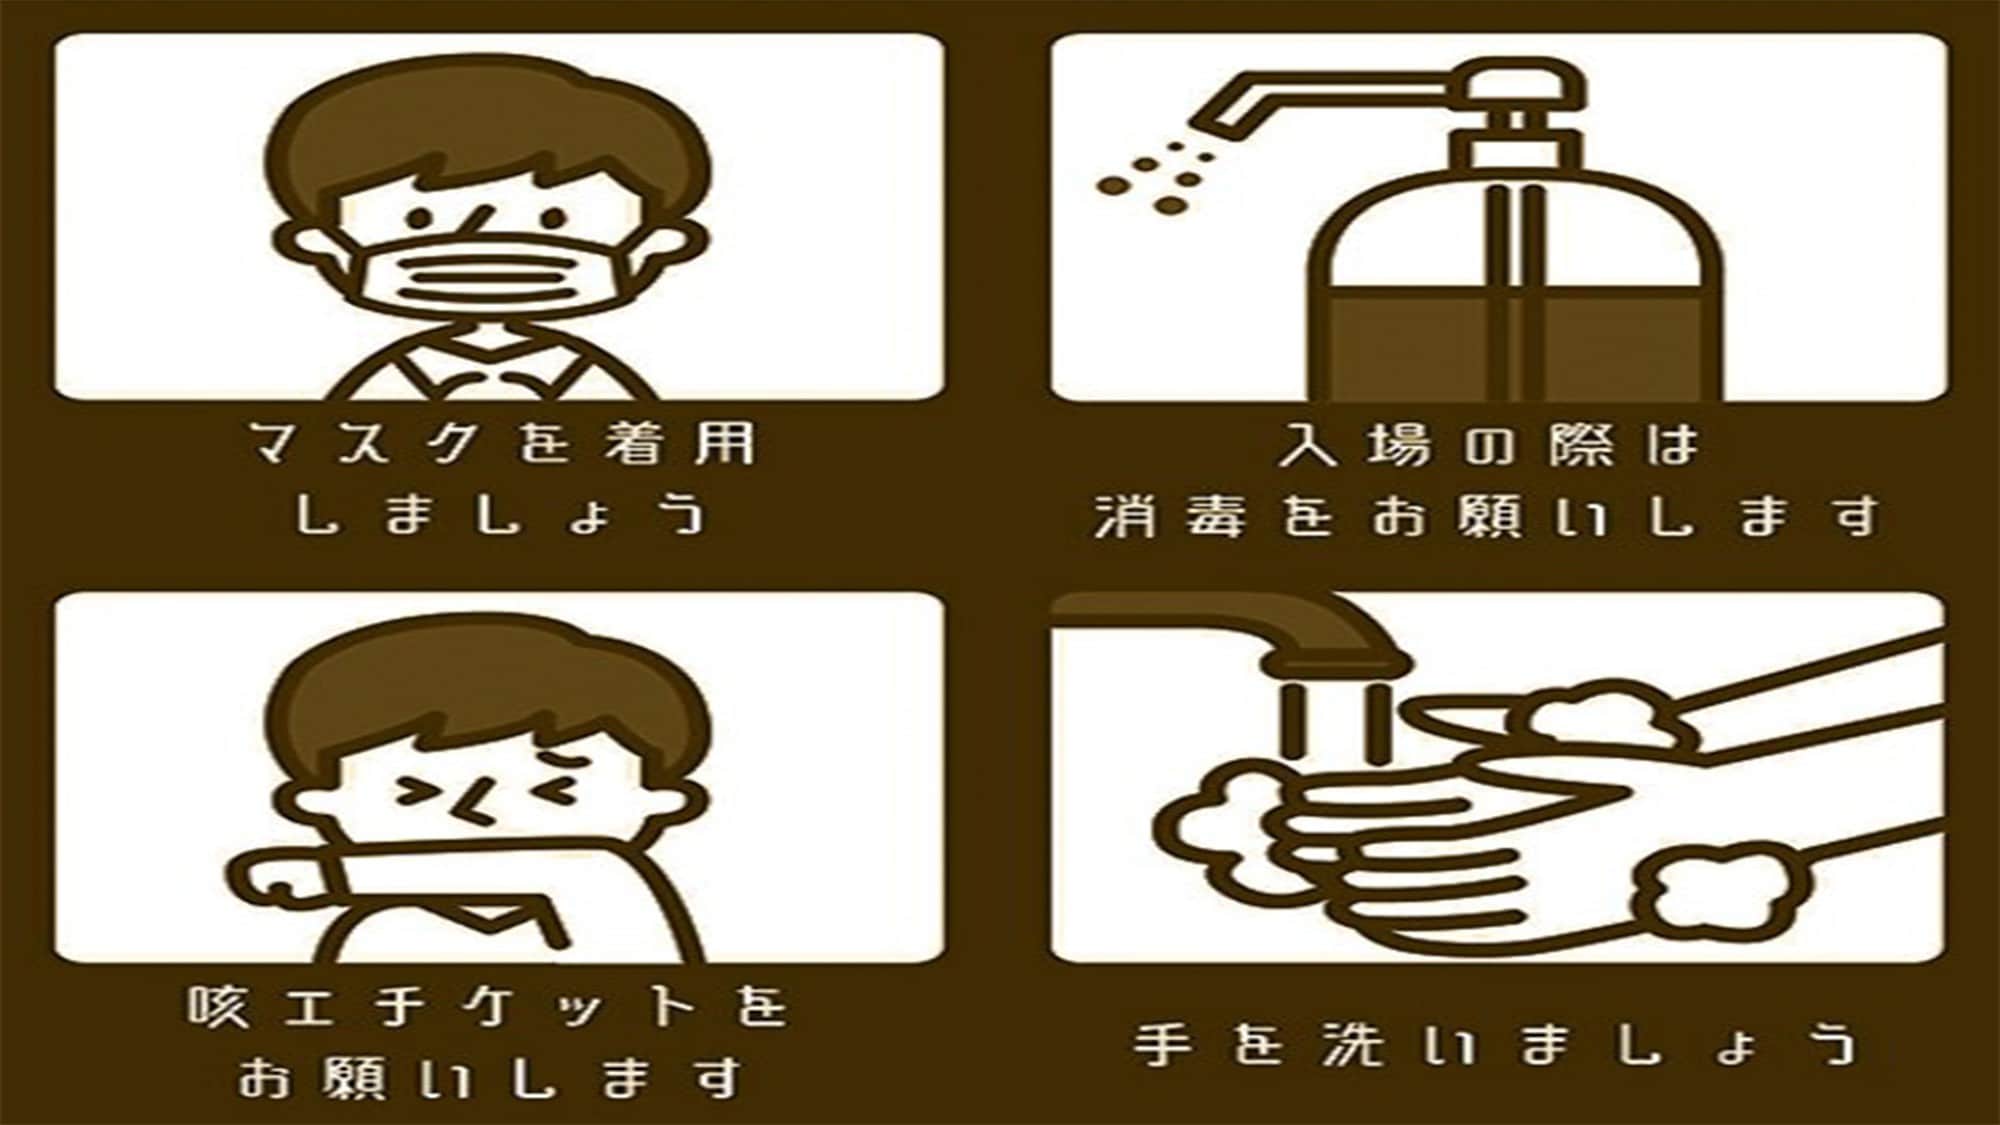 Hygiene management pictogram